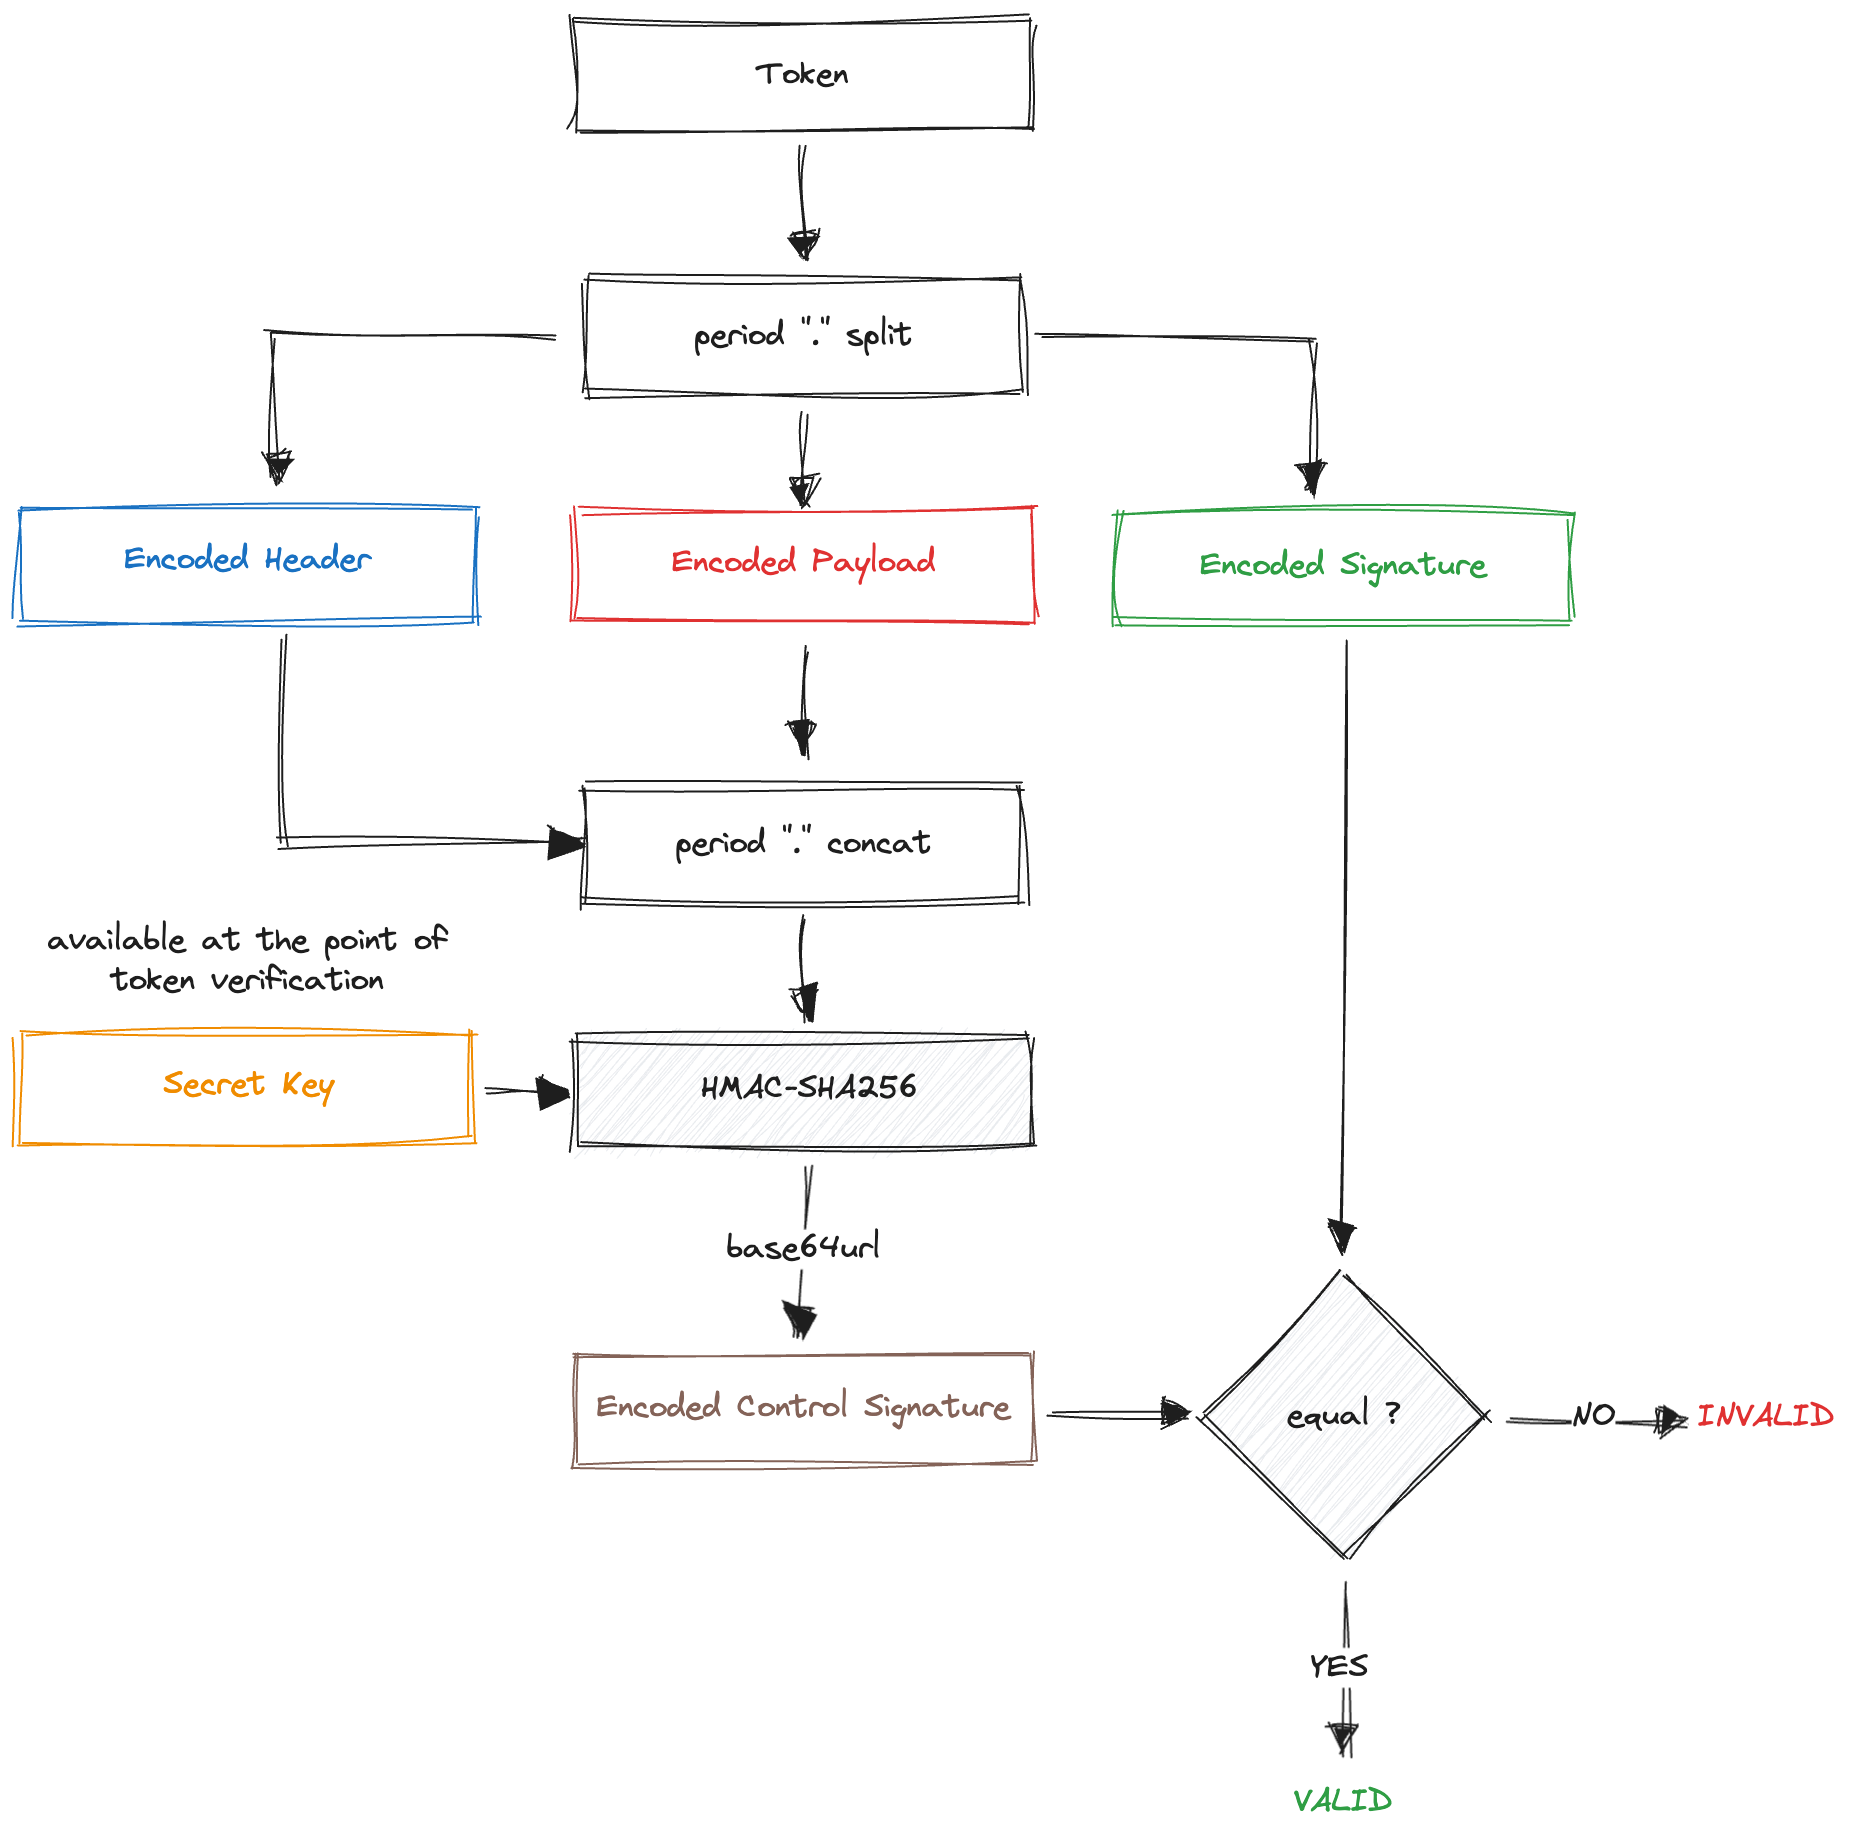 Process of JWT verification using the HS256 algorithm